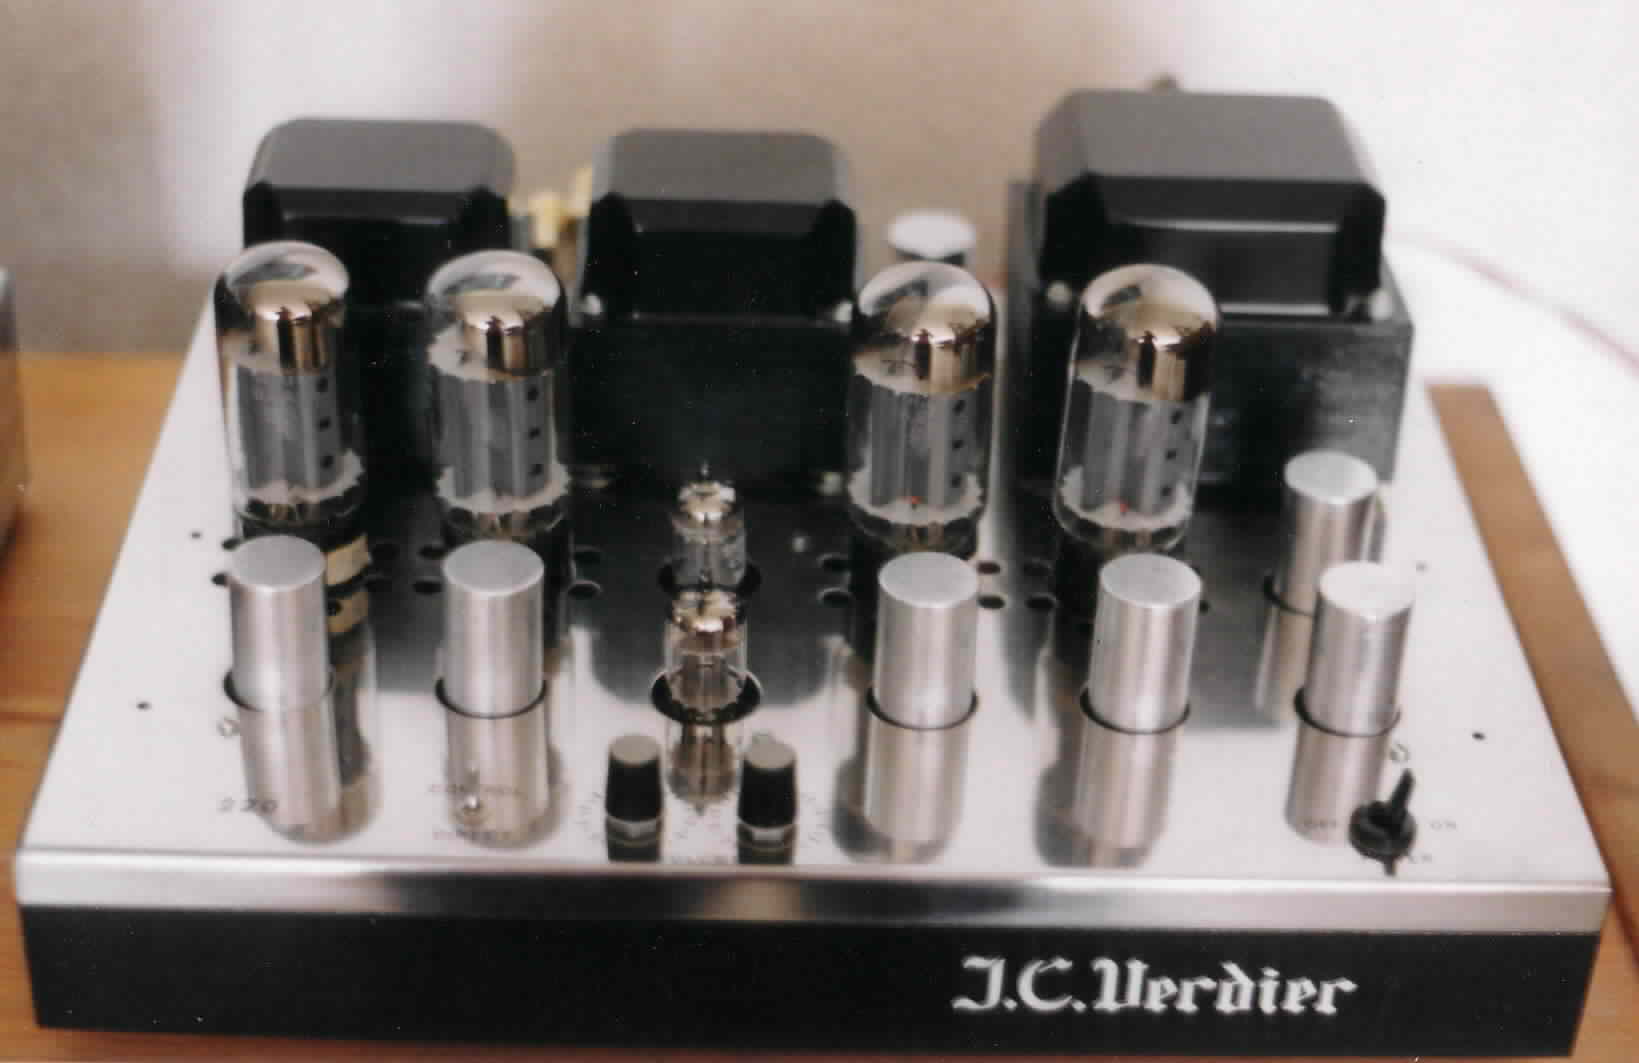 J.C. Verdier Platine Verdier EL34 6CA7 EL 34 tube amplifier Röhrenverstärker Endstufe valve tubeamp amplificateur lampes amplificador valvula buizen schaltplan schematic circuit diagram repair